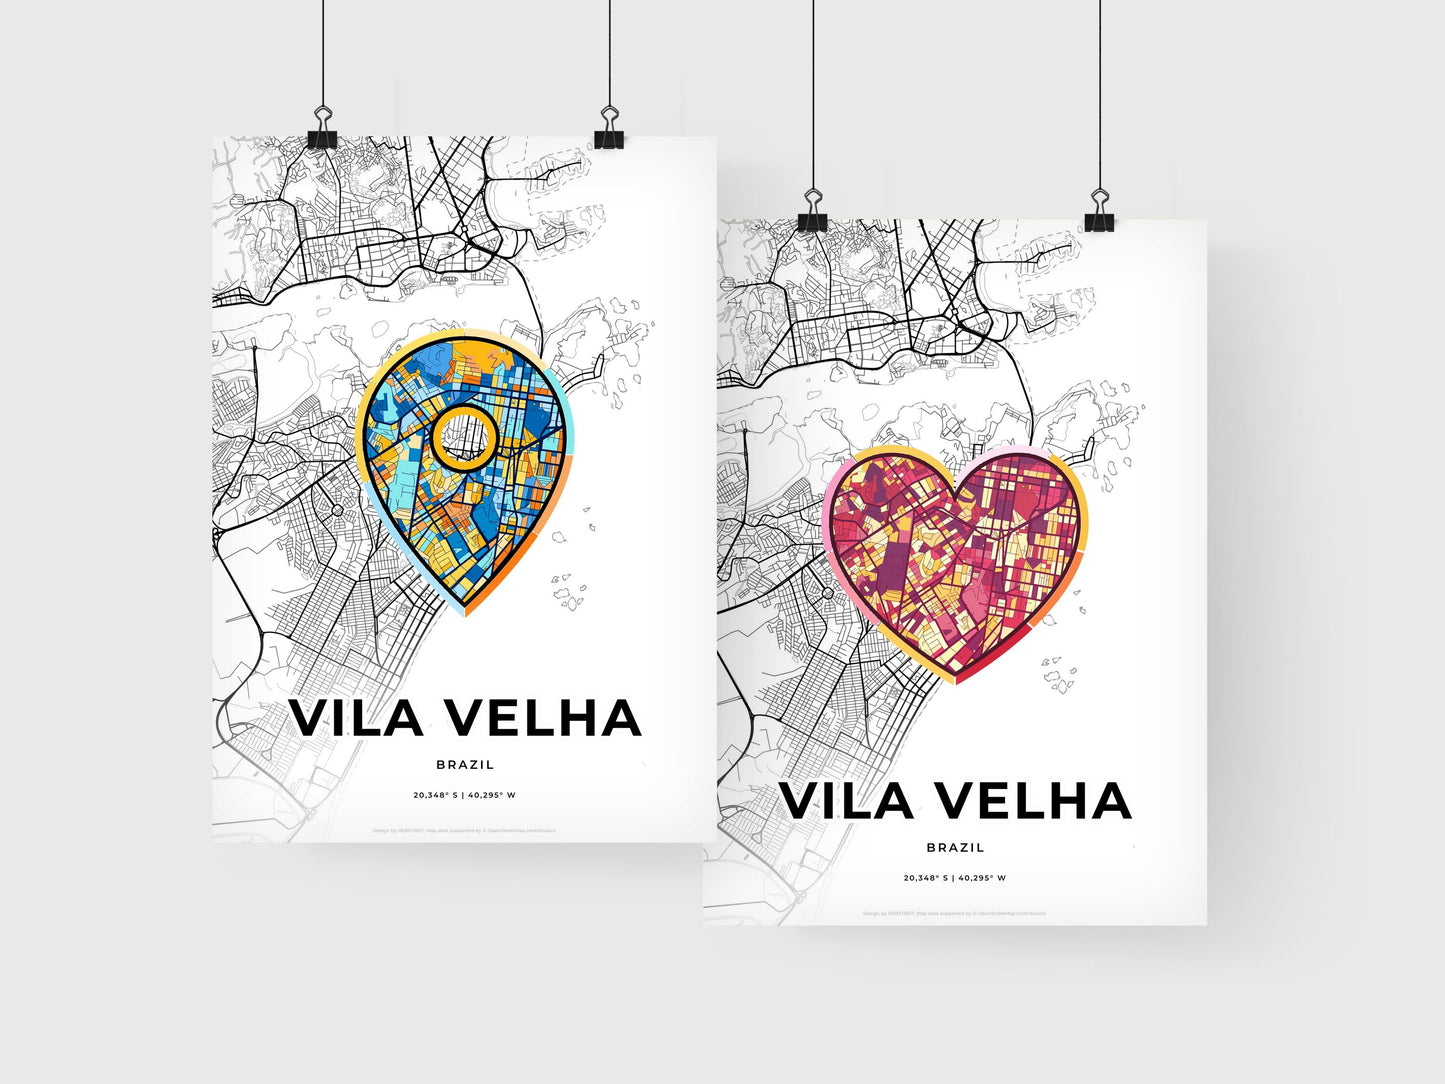 VILA VELHA BRAZIL minimal art map with a colorful icon.